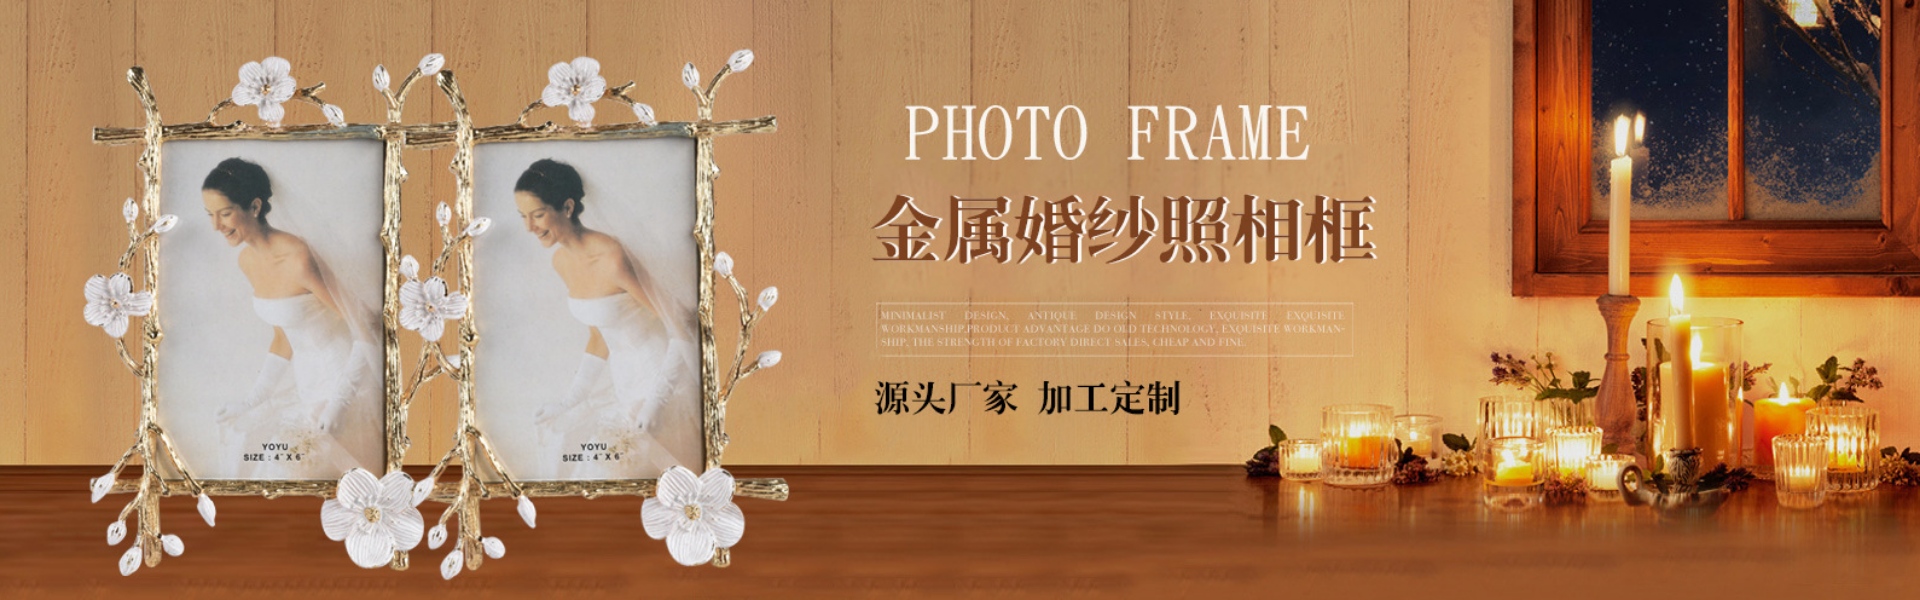 artware, cadou, mobilier,Dongguan xinzhirun Crafts Co., Ltd